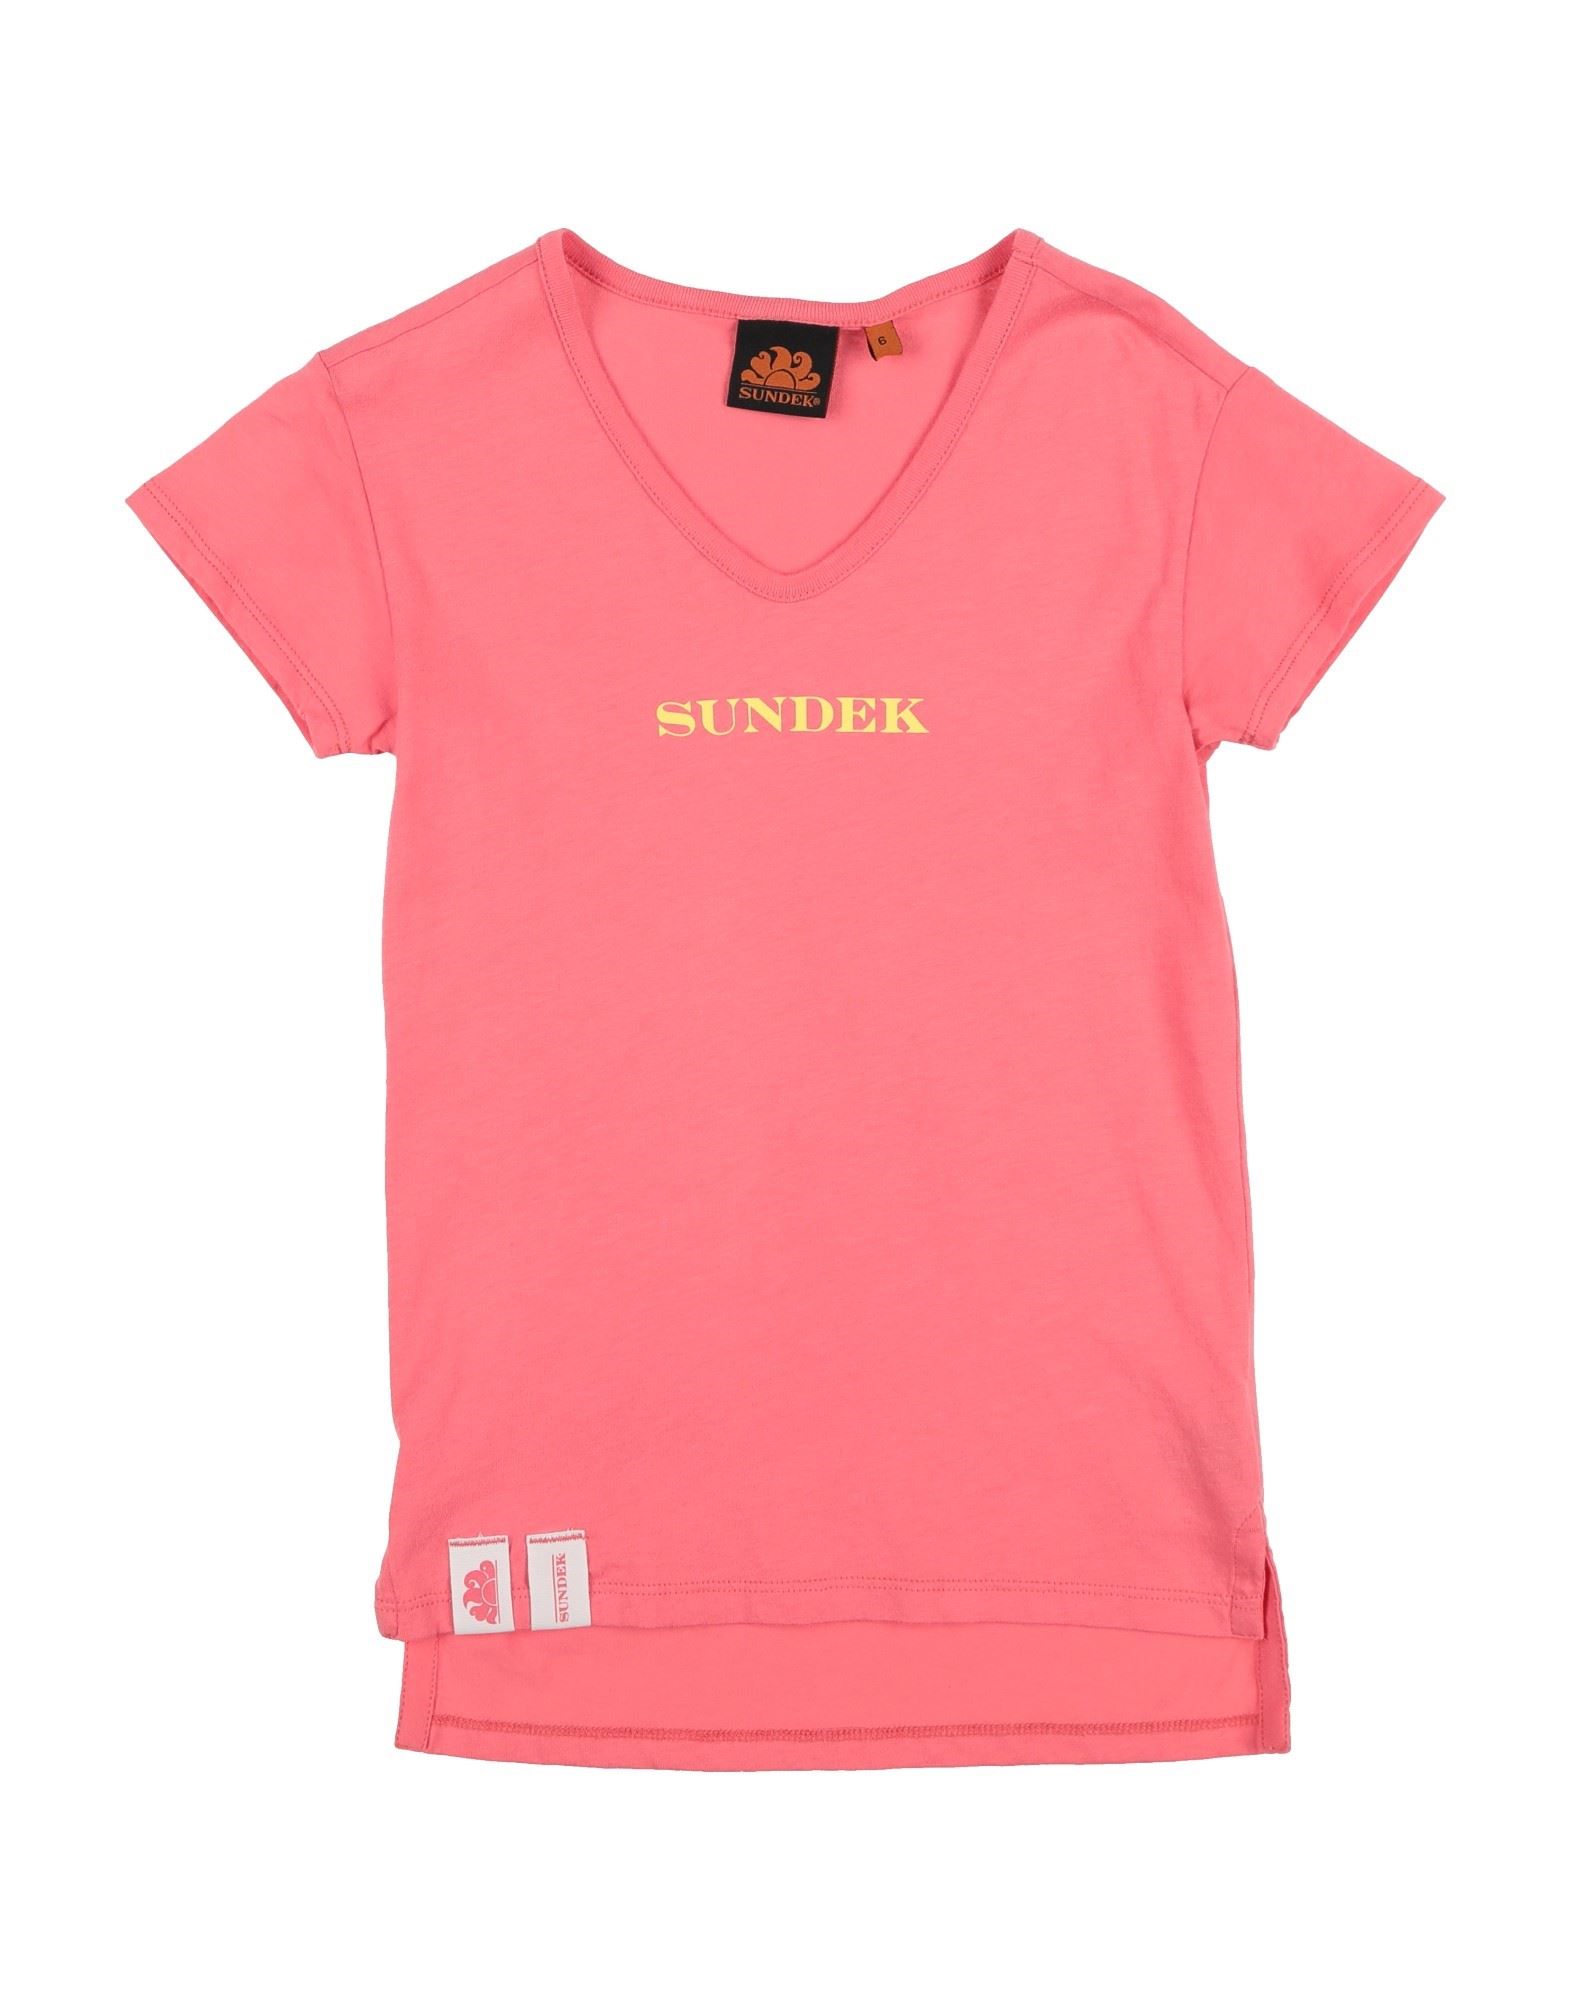 Sundek Kids' T-shirts In Red